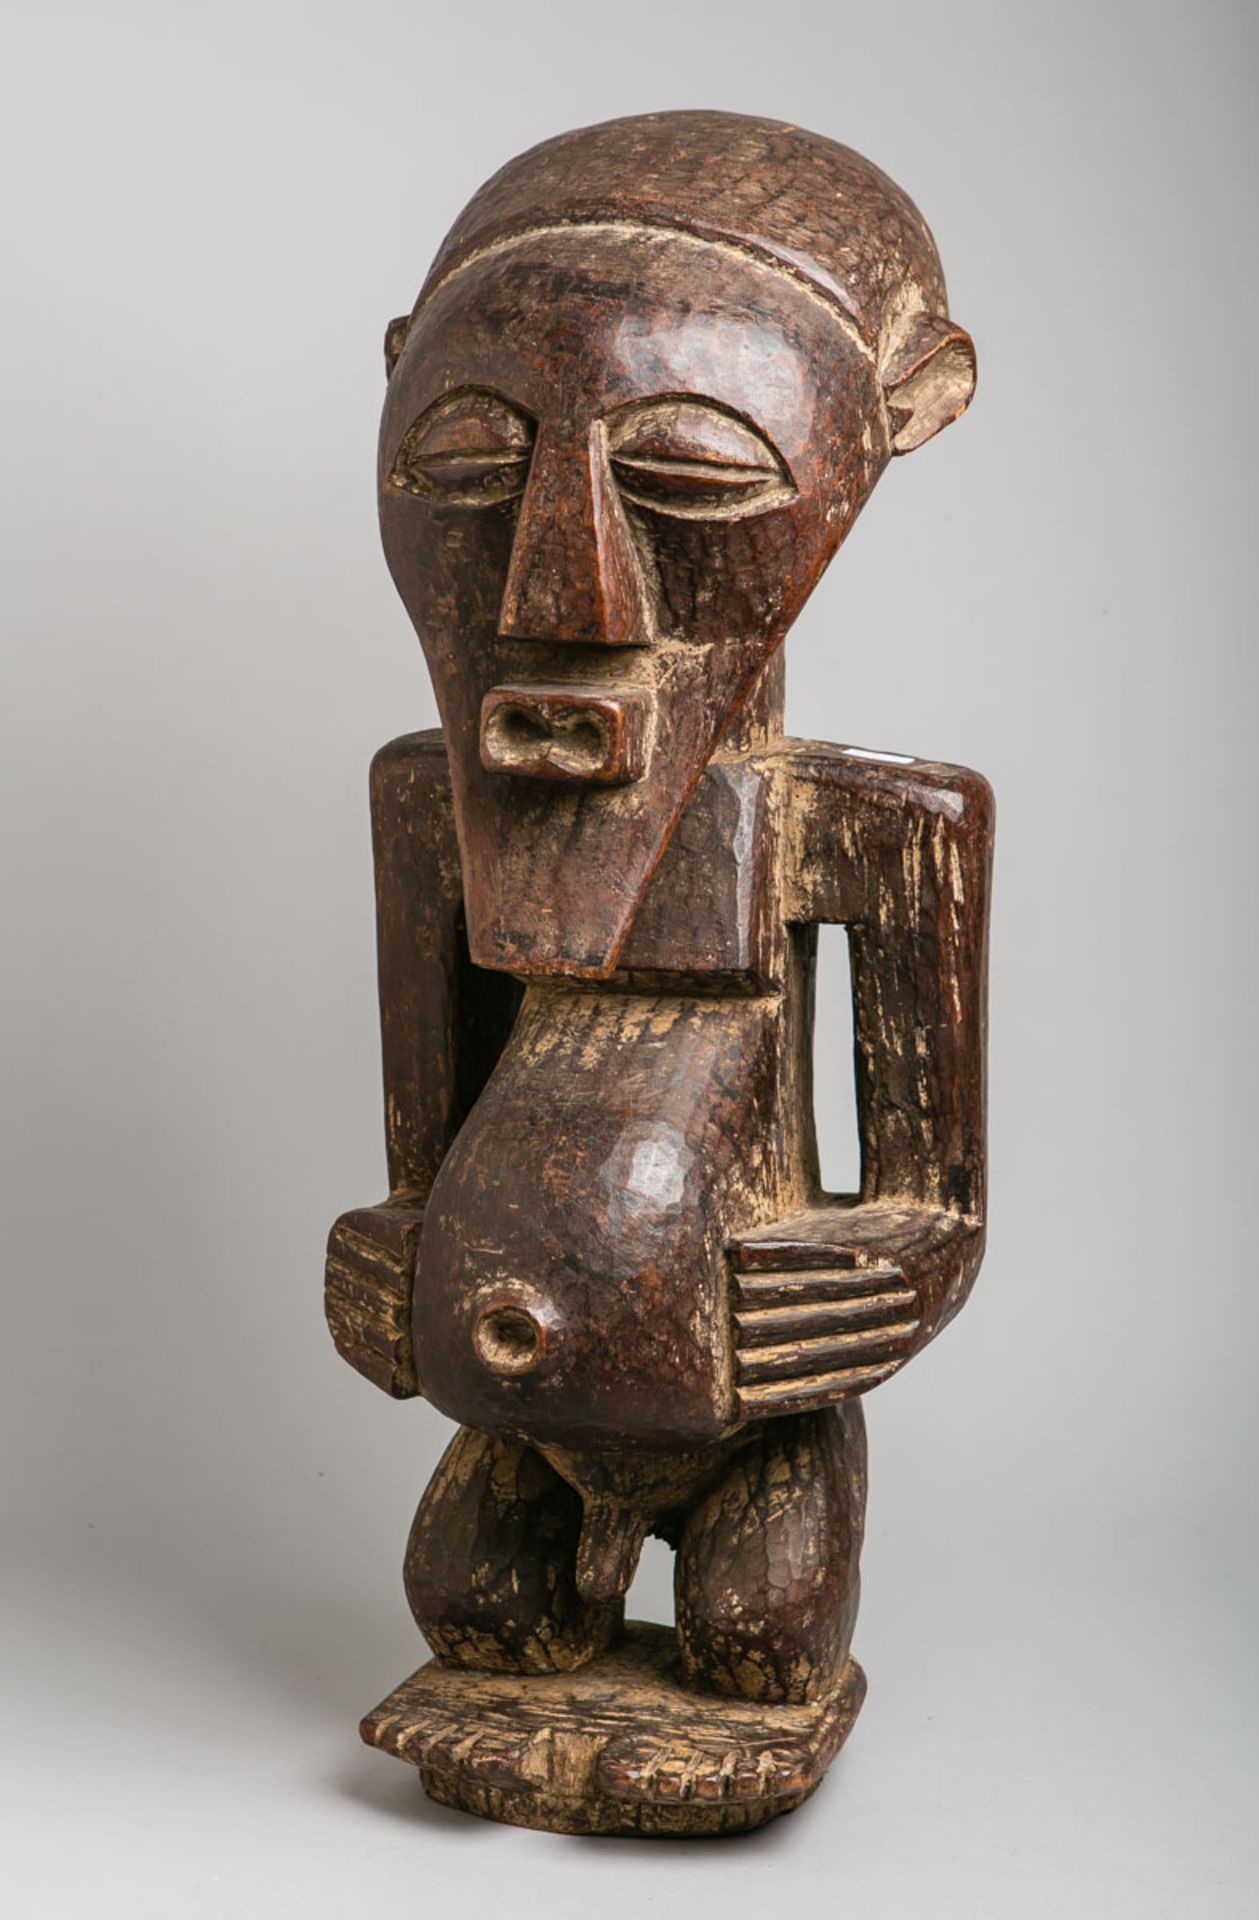 Afrikanische Skulptur (Afrika, genaue Herkunft u. Alter unbekannt)